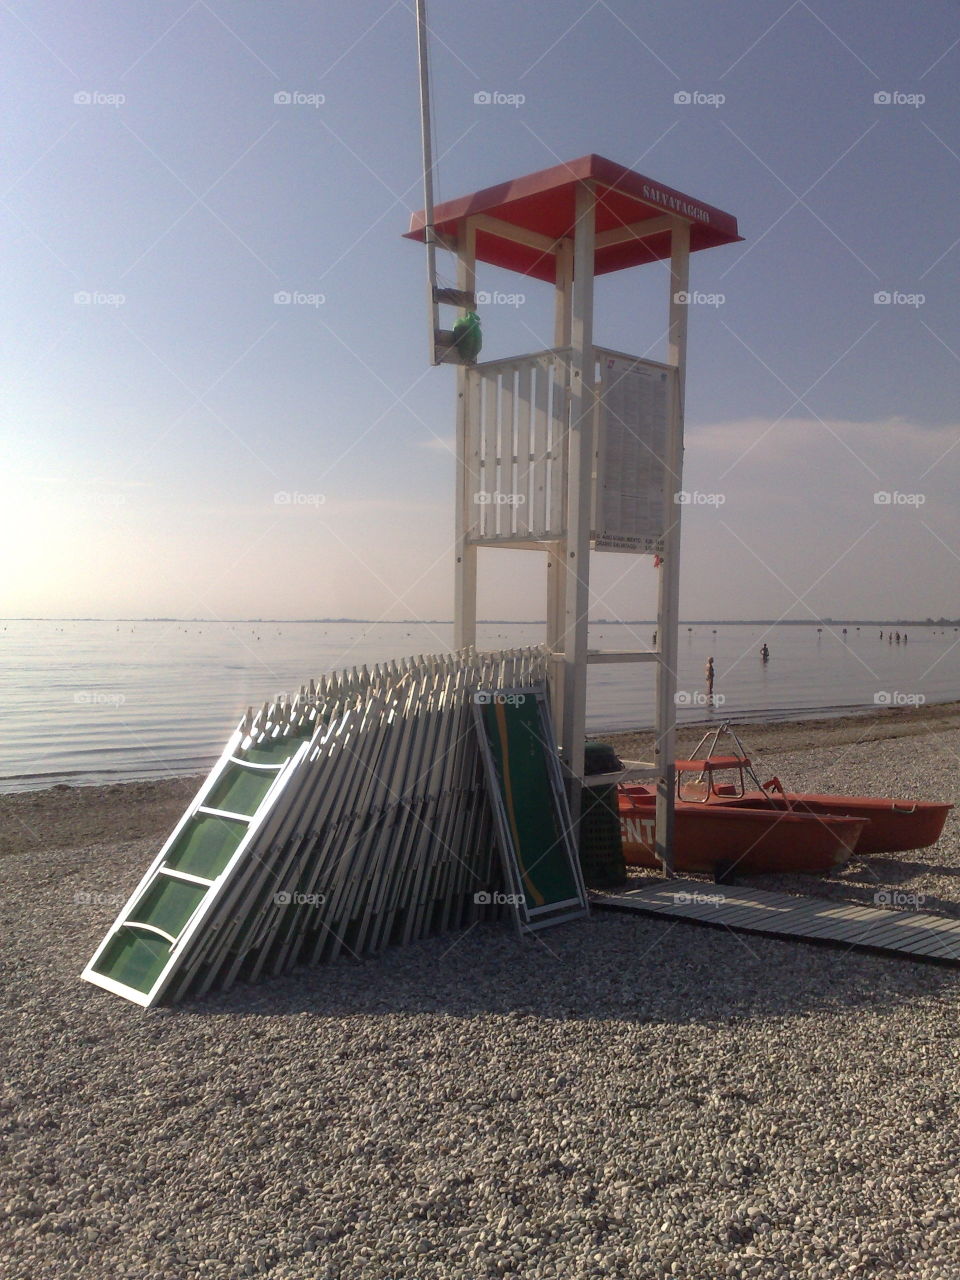 in the beach, lifeguard salvamento, deck chairs